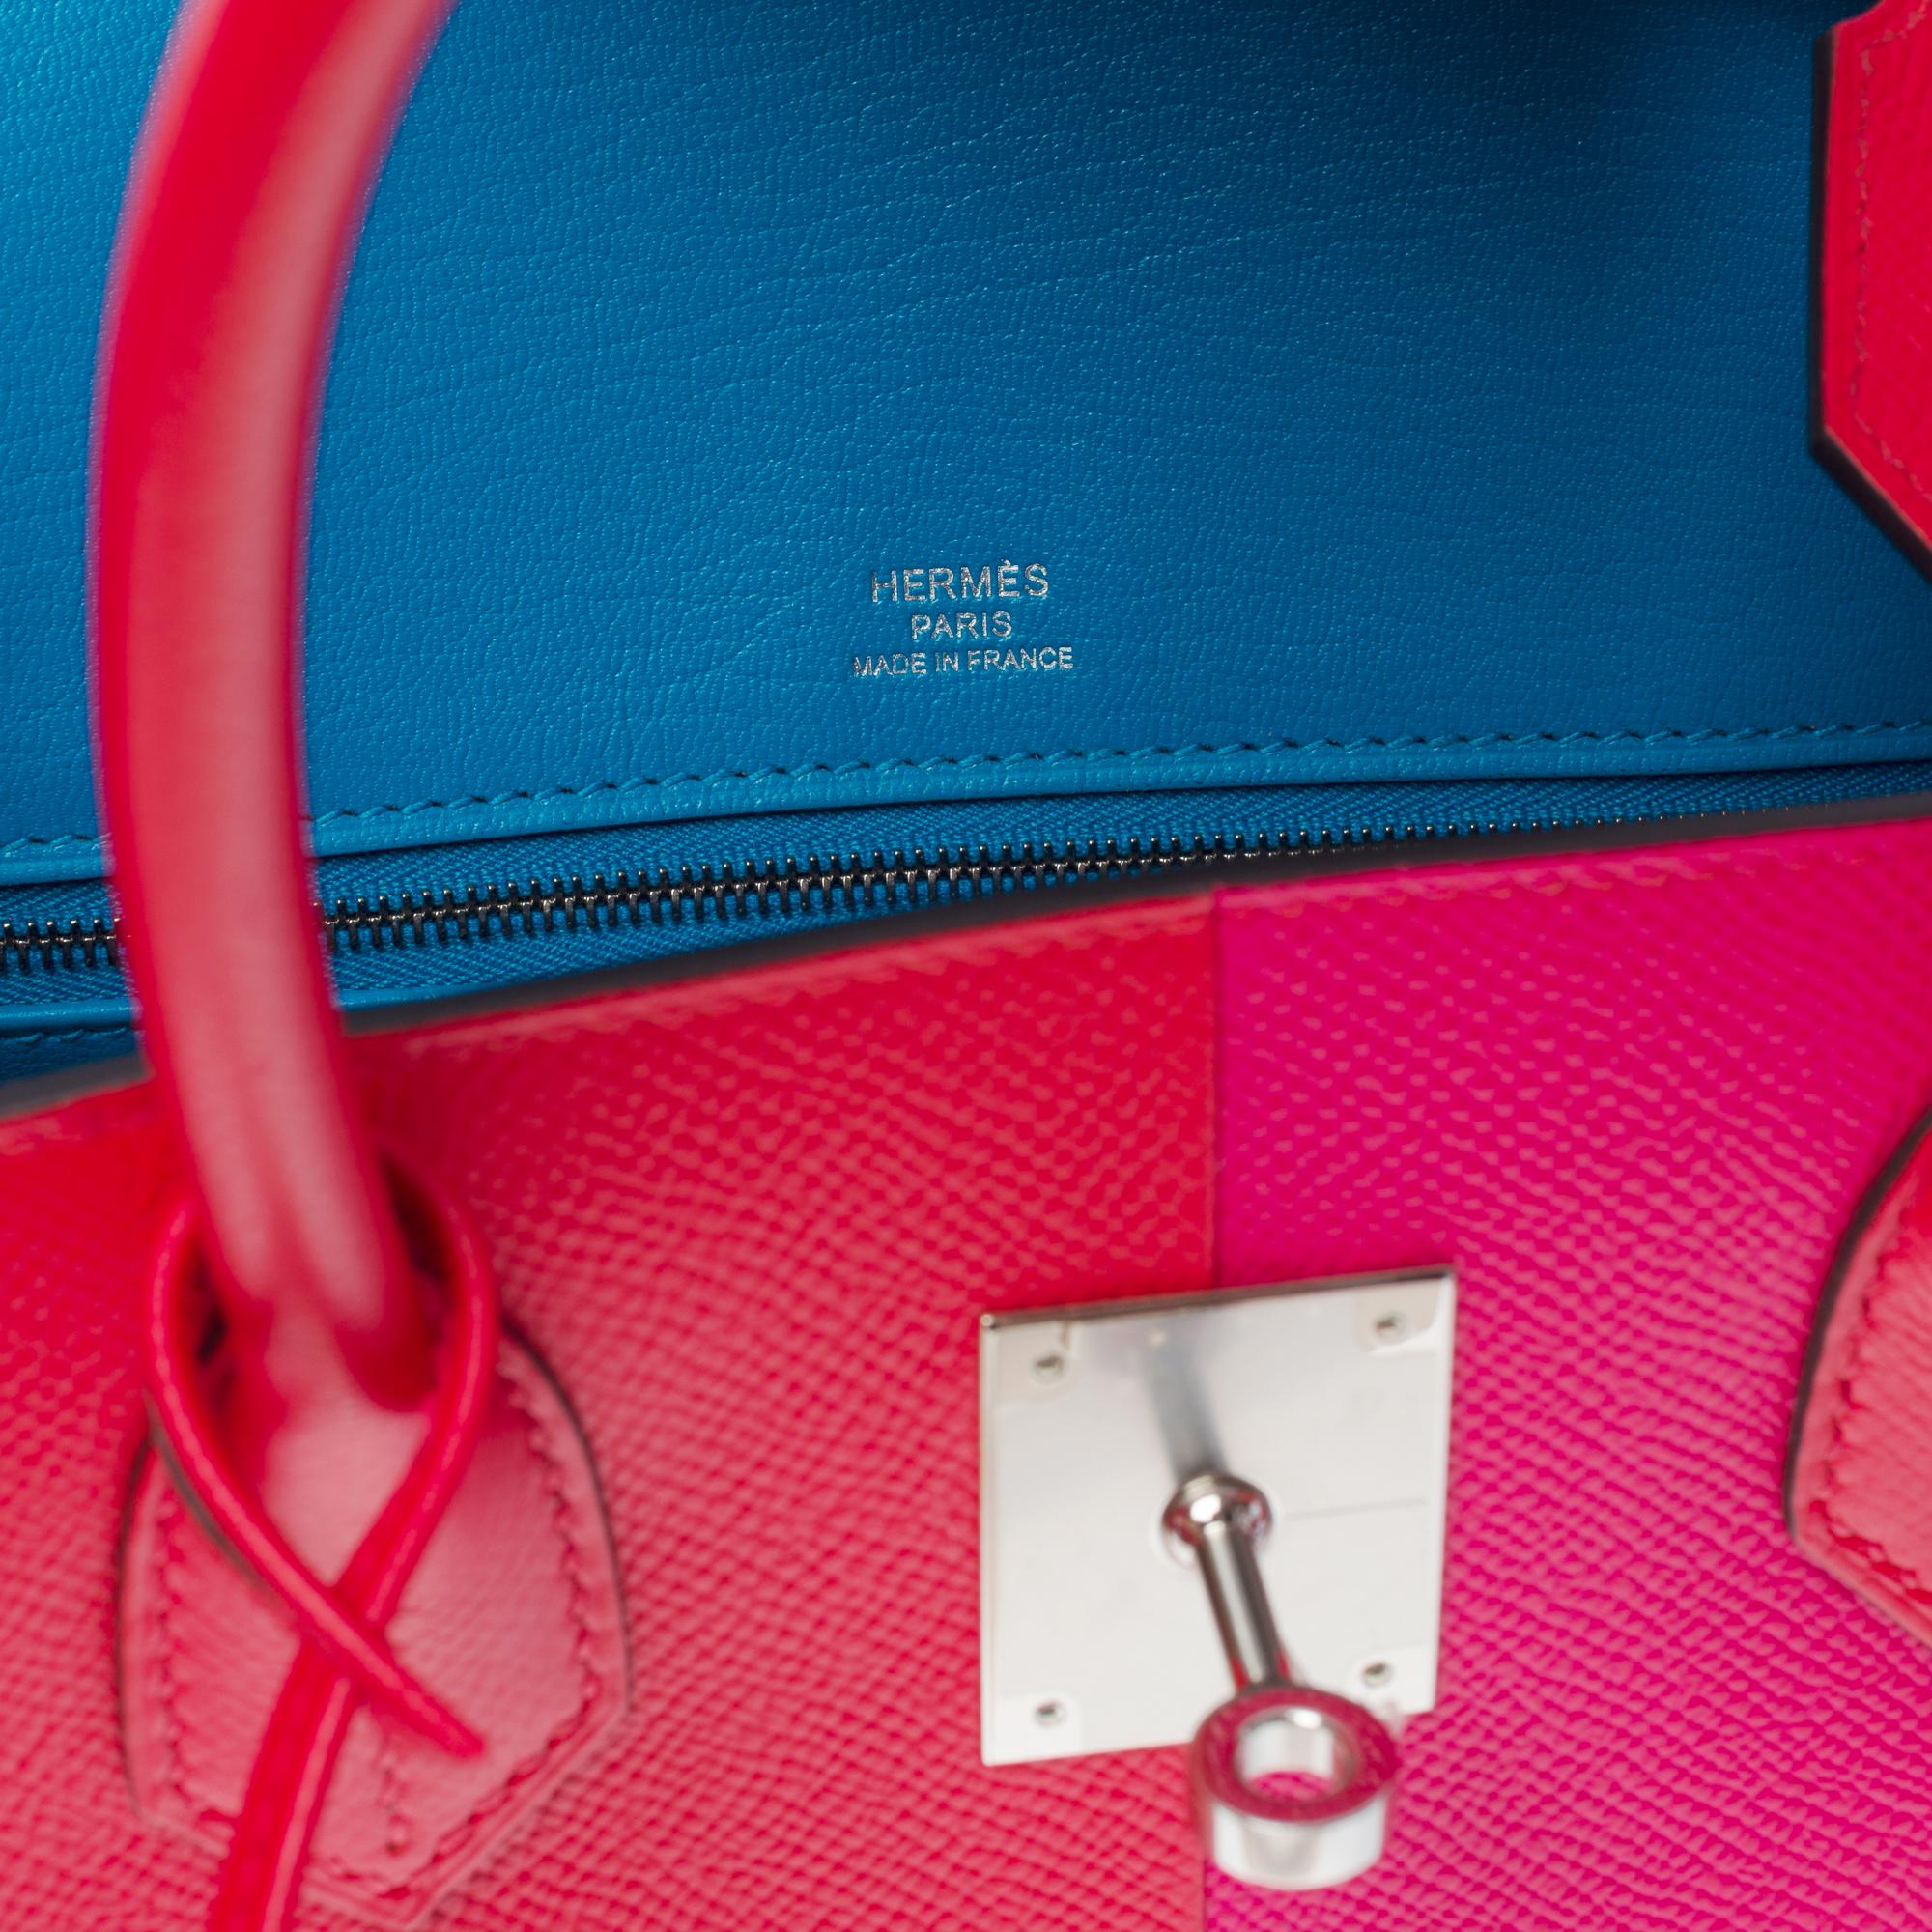 New Hermès Kazak limited edition Birkin 30 handbag in Red/Pink Epsom leather, SHW 1